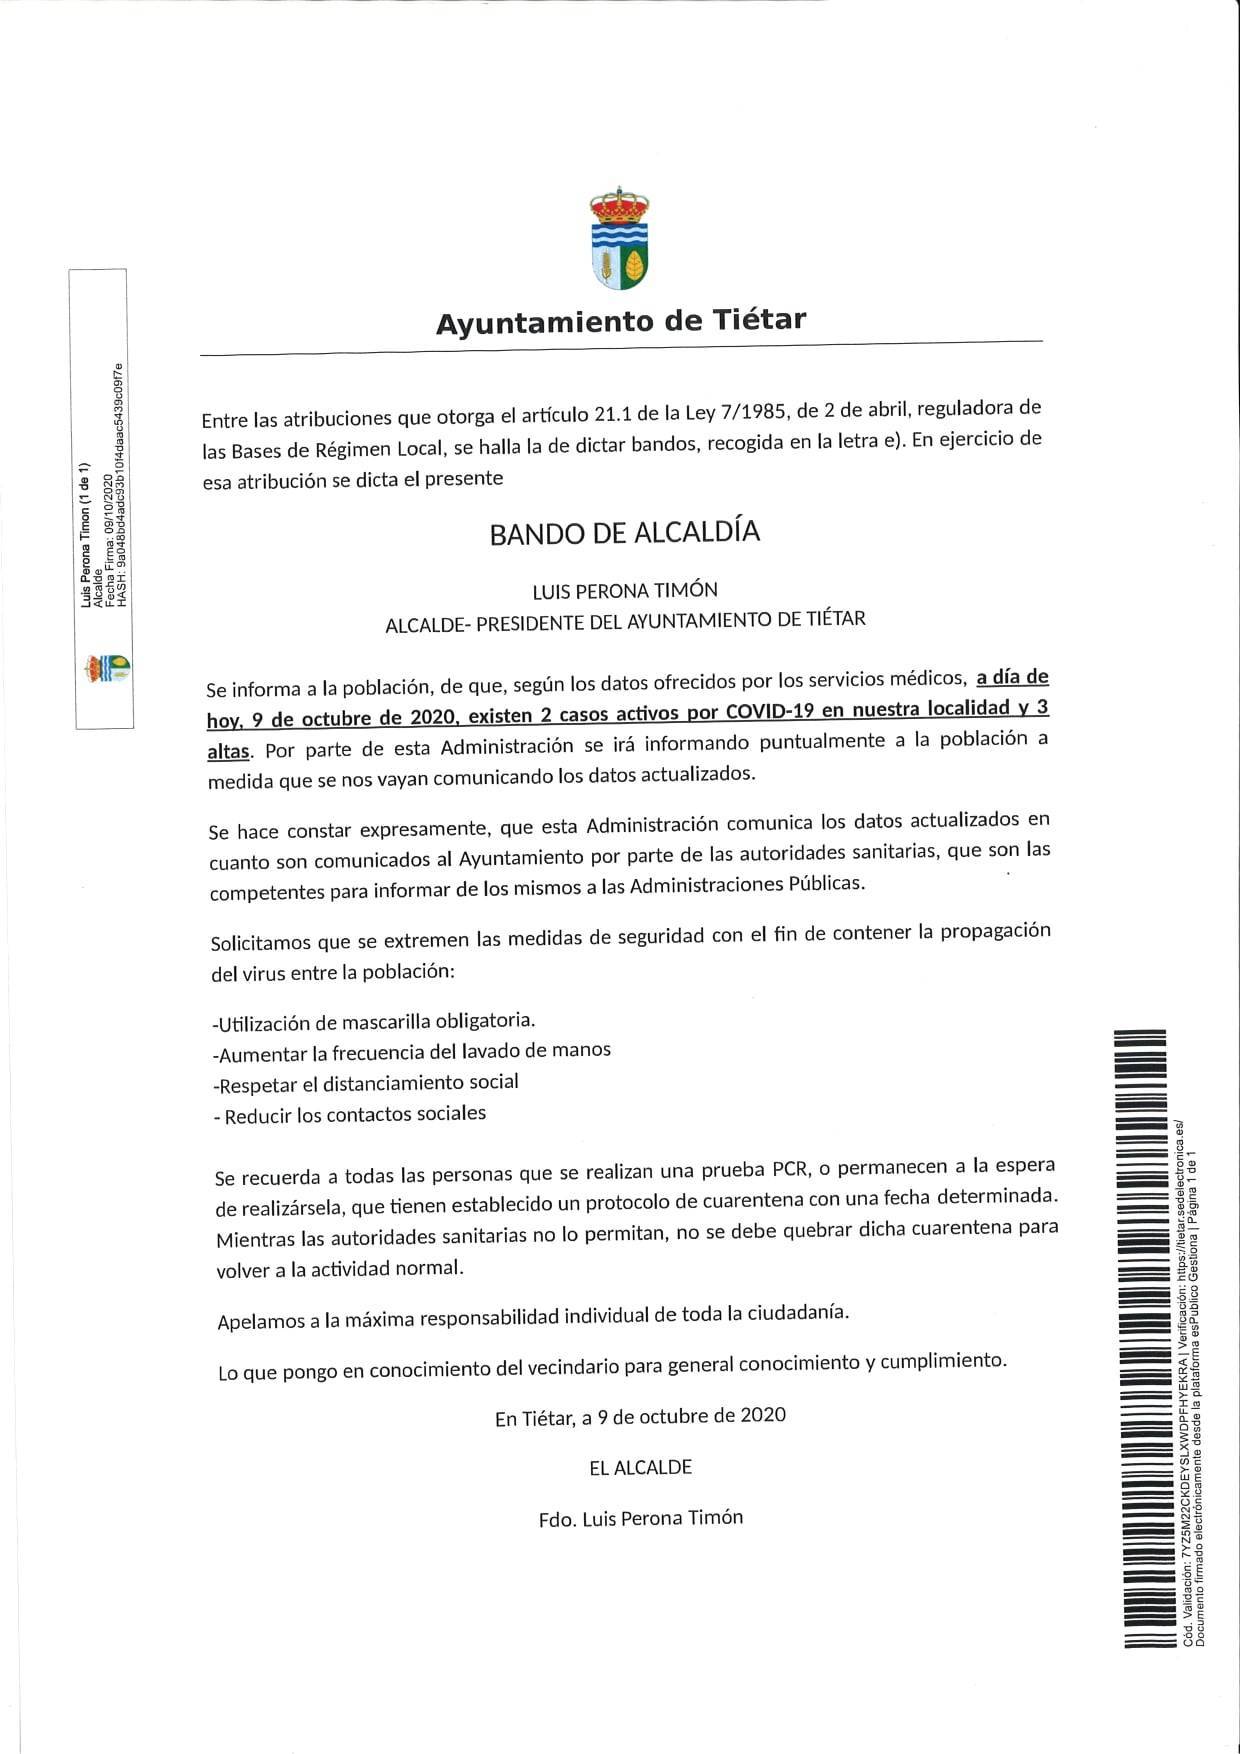 Dos casos activos de COVID-19 (octubre 2020) - Tiétar (Cáceres)